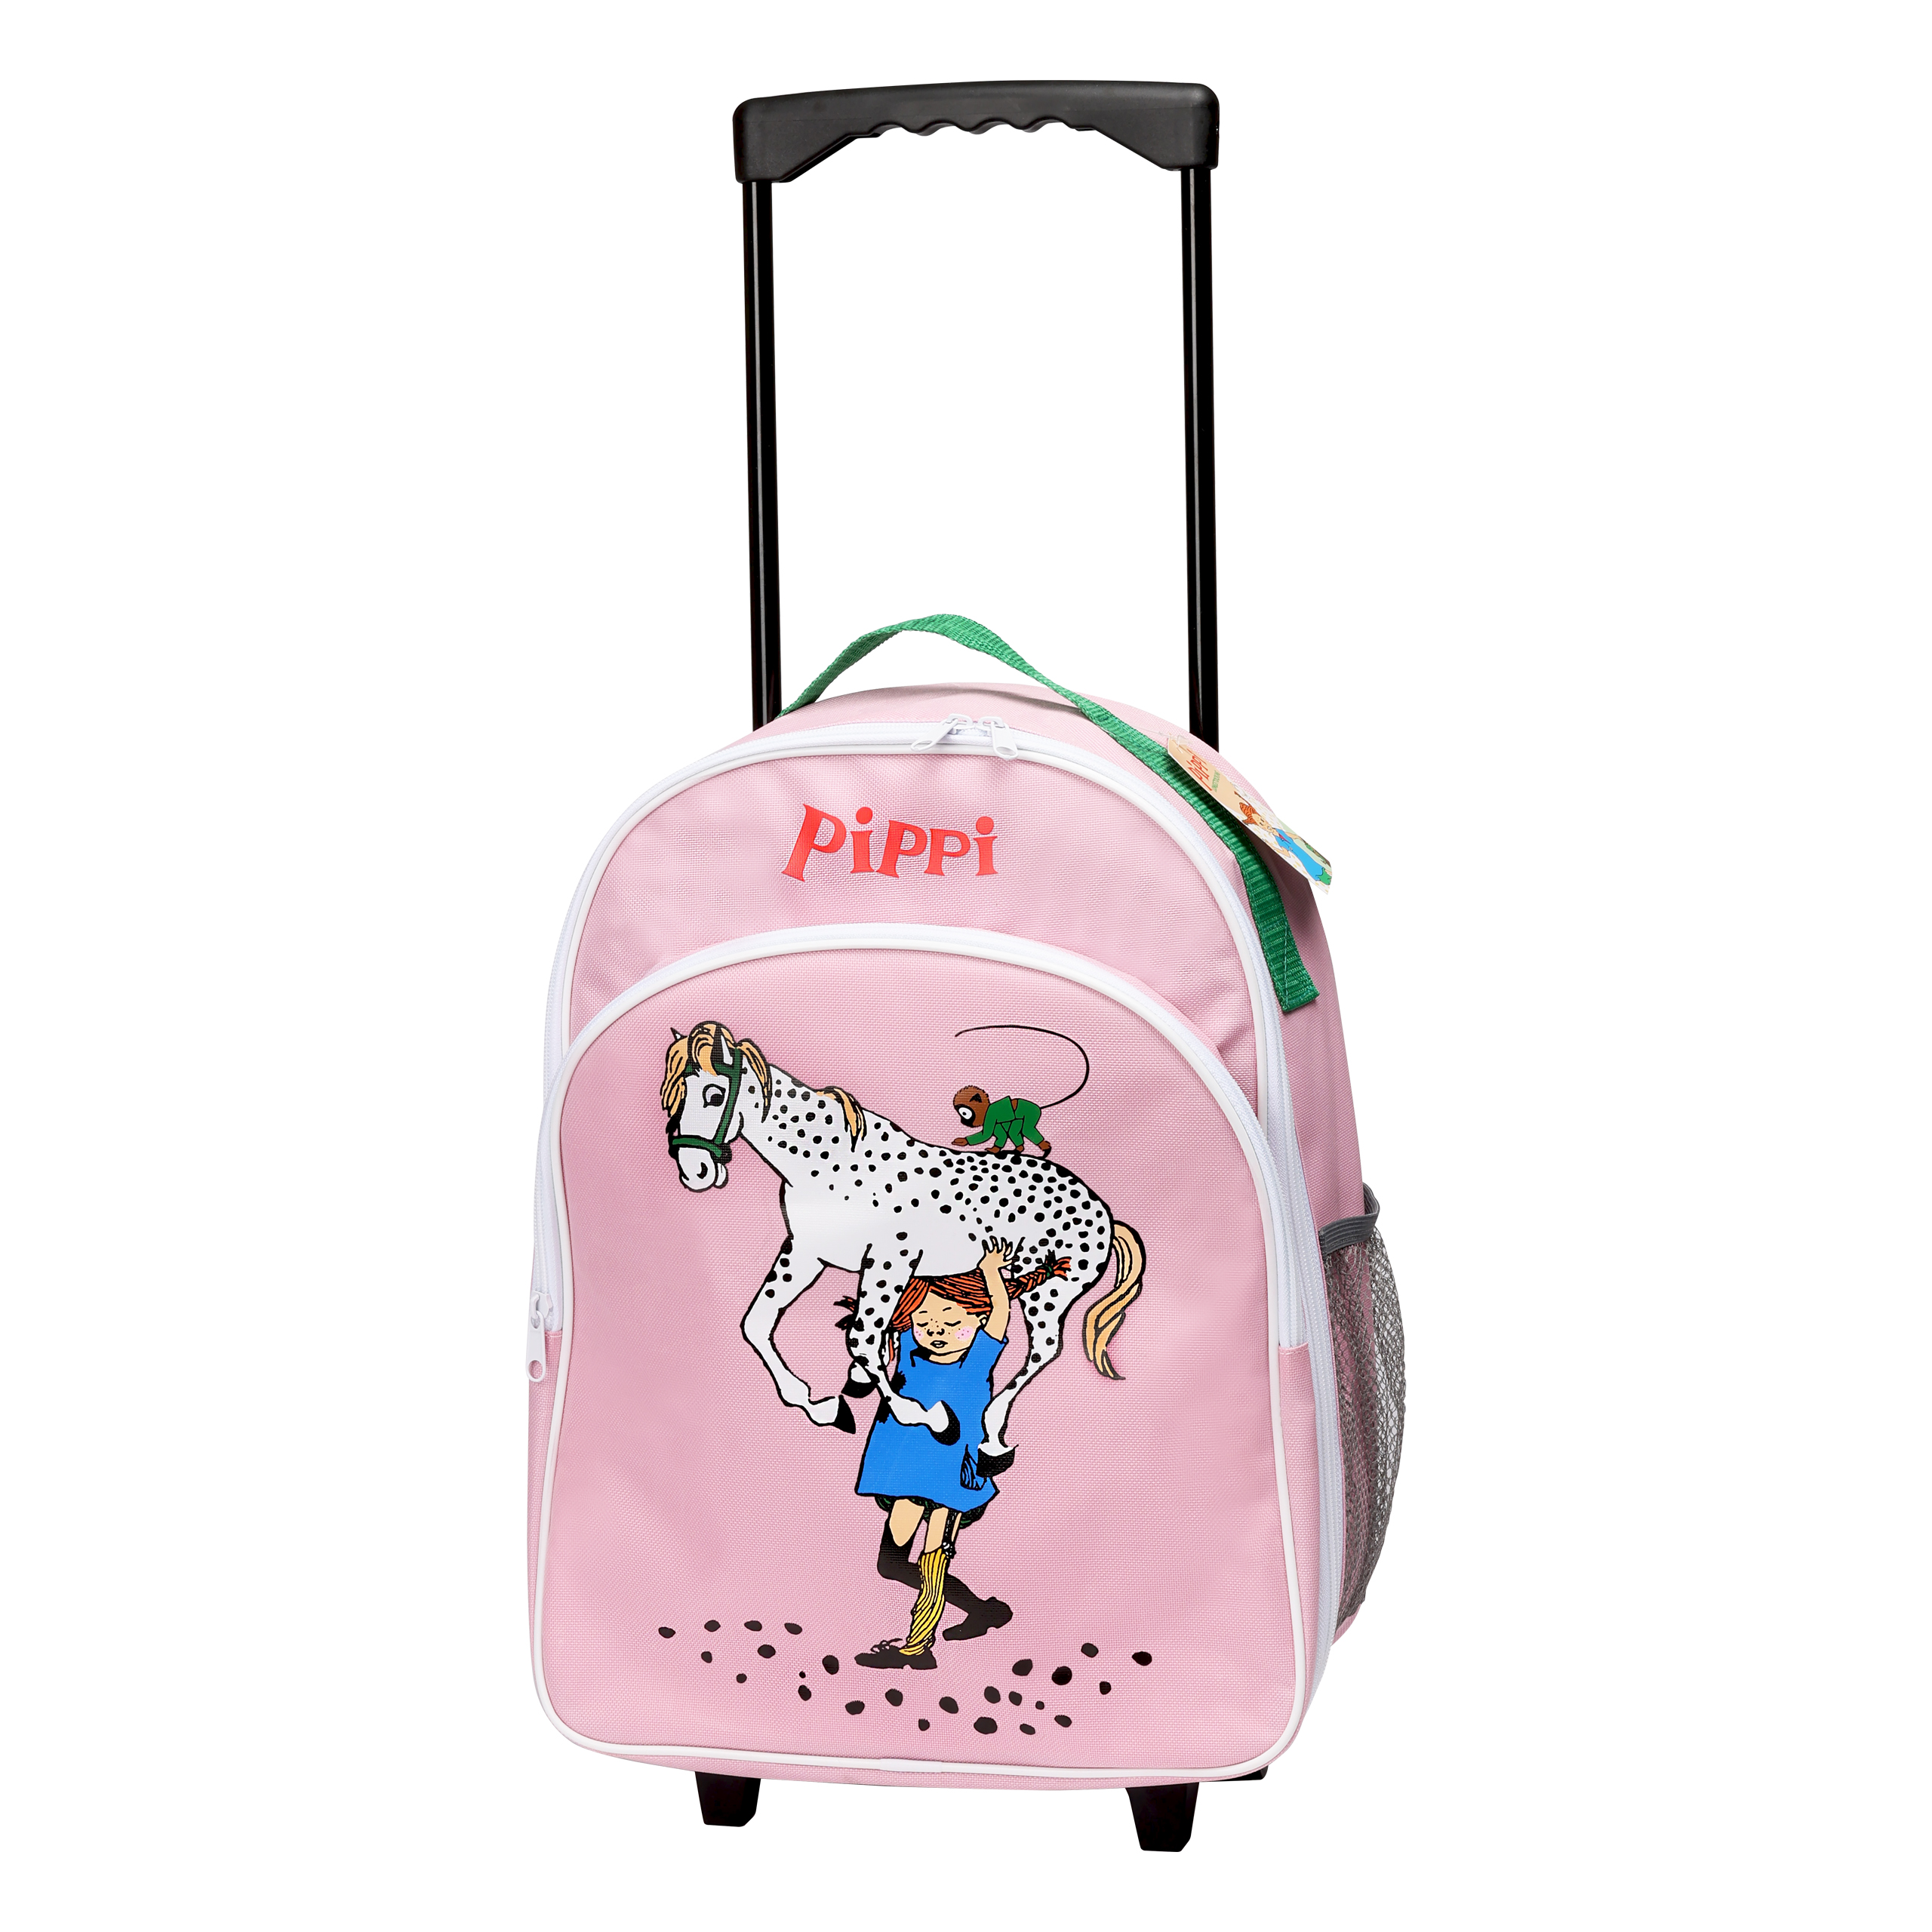 Kids bags pippi kids bag travel bag pink